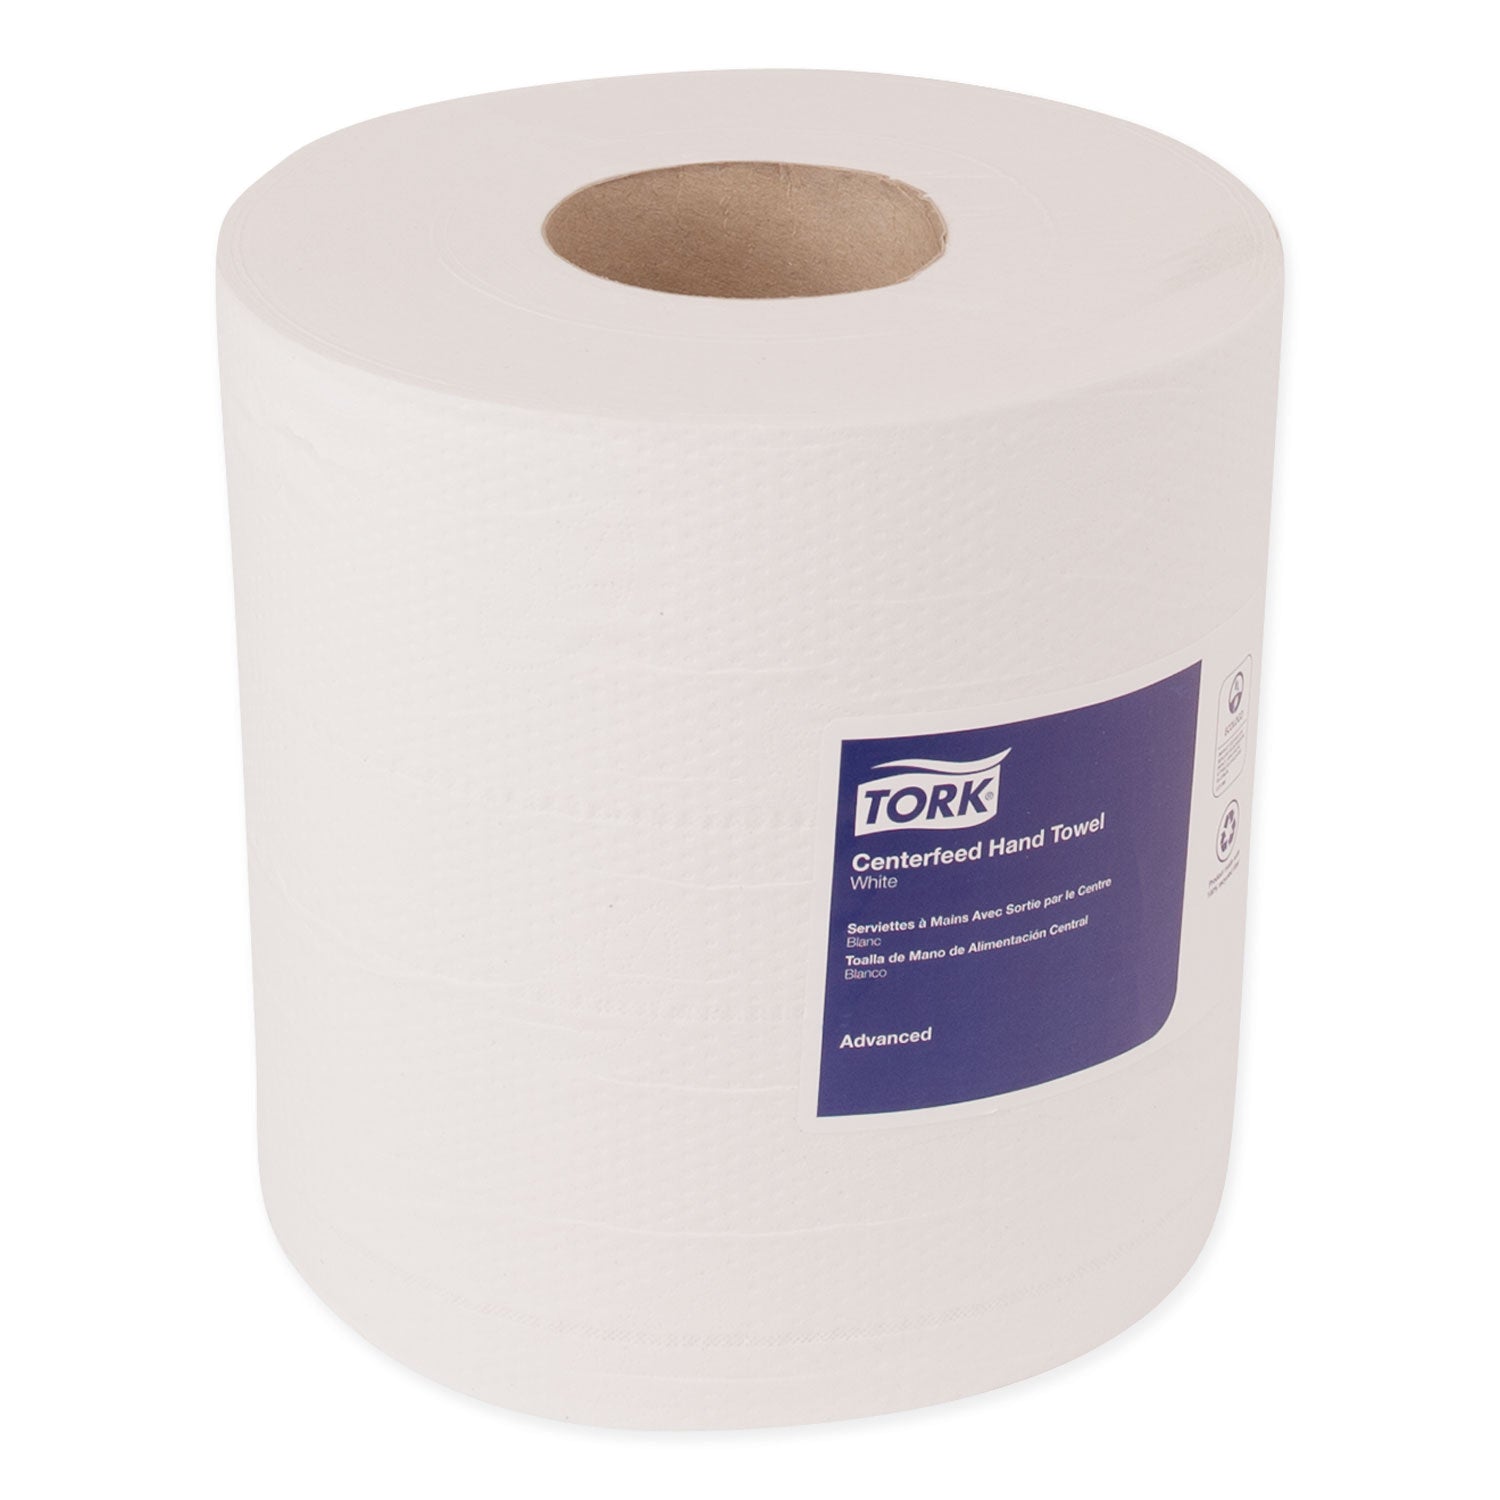 centerfeed-hand-towel-2-ply-76-x-118-white-500-roll-6-rolls-carton_trk120932 - 5